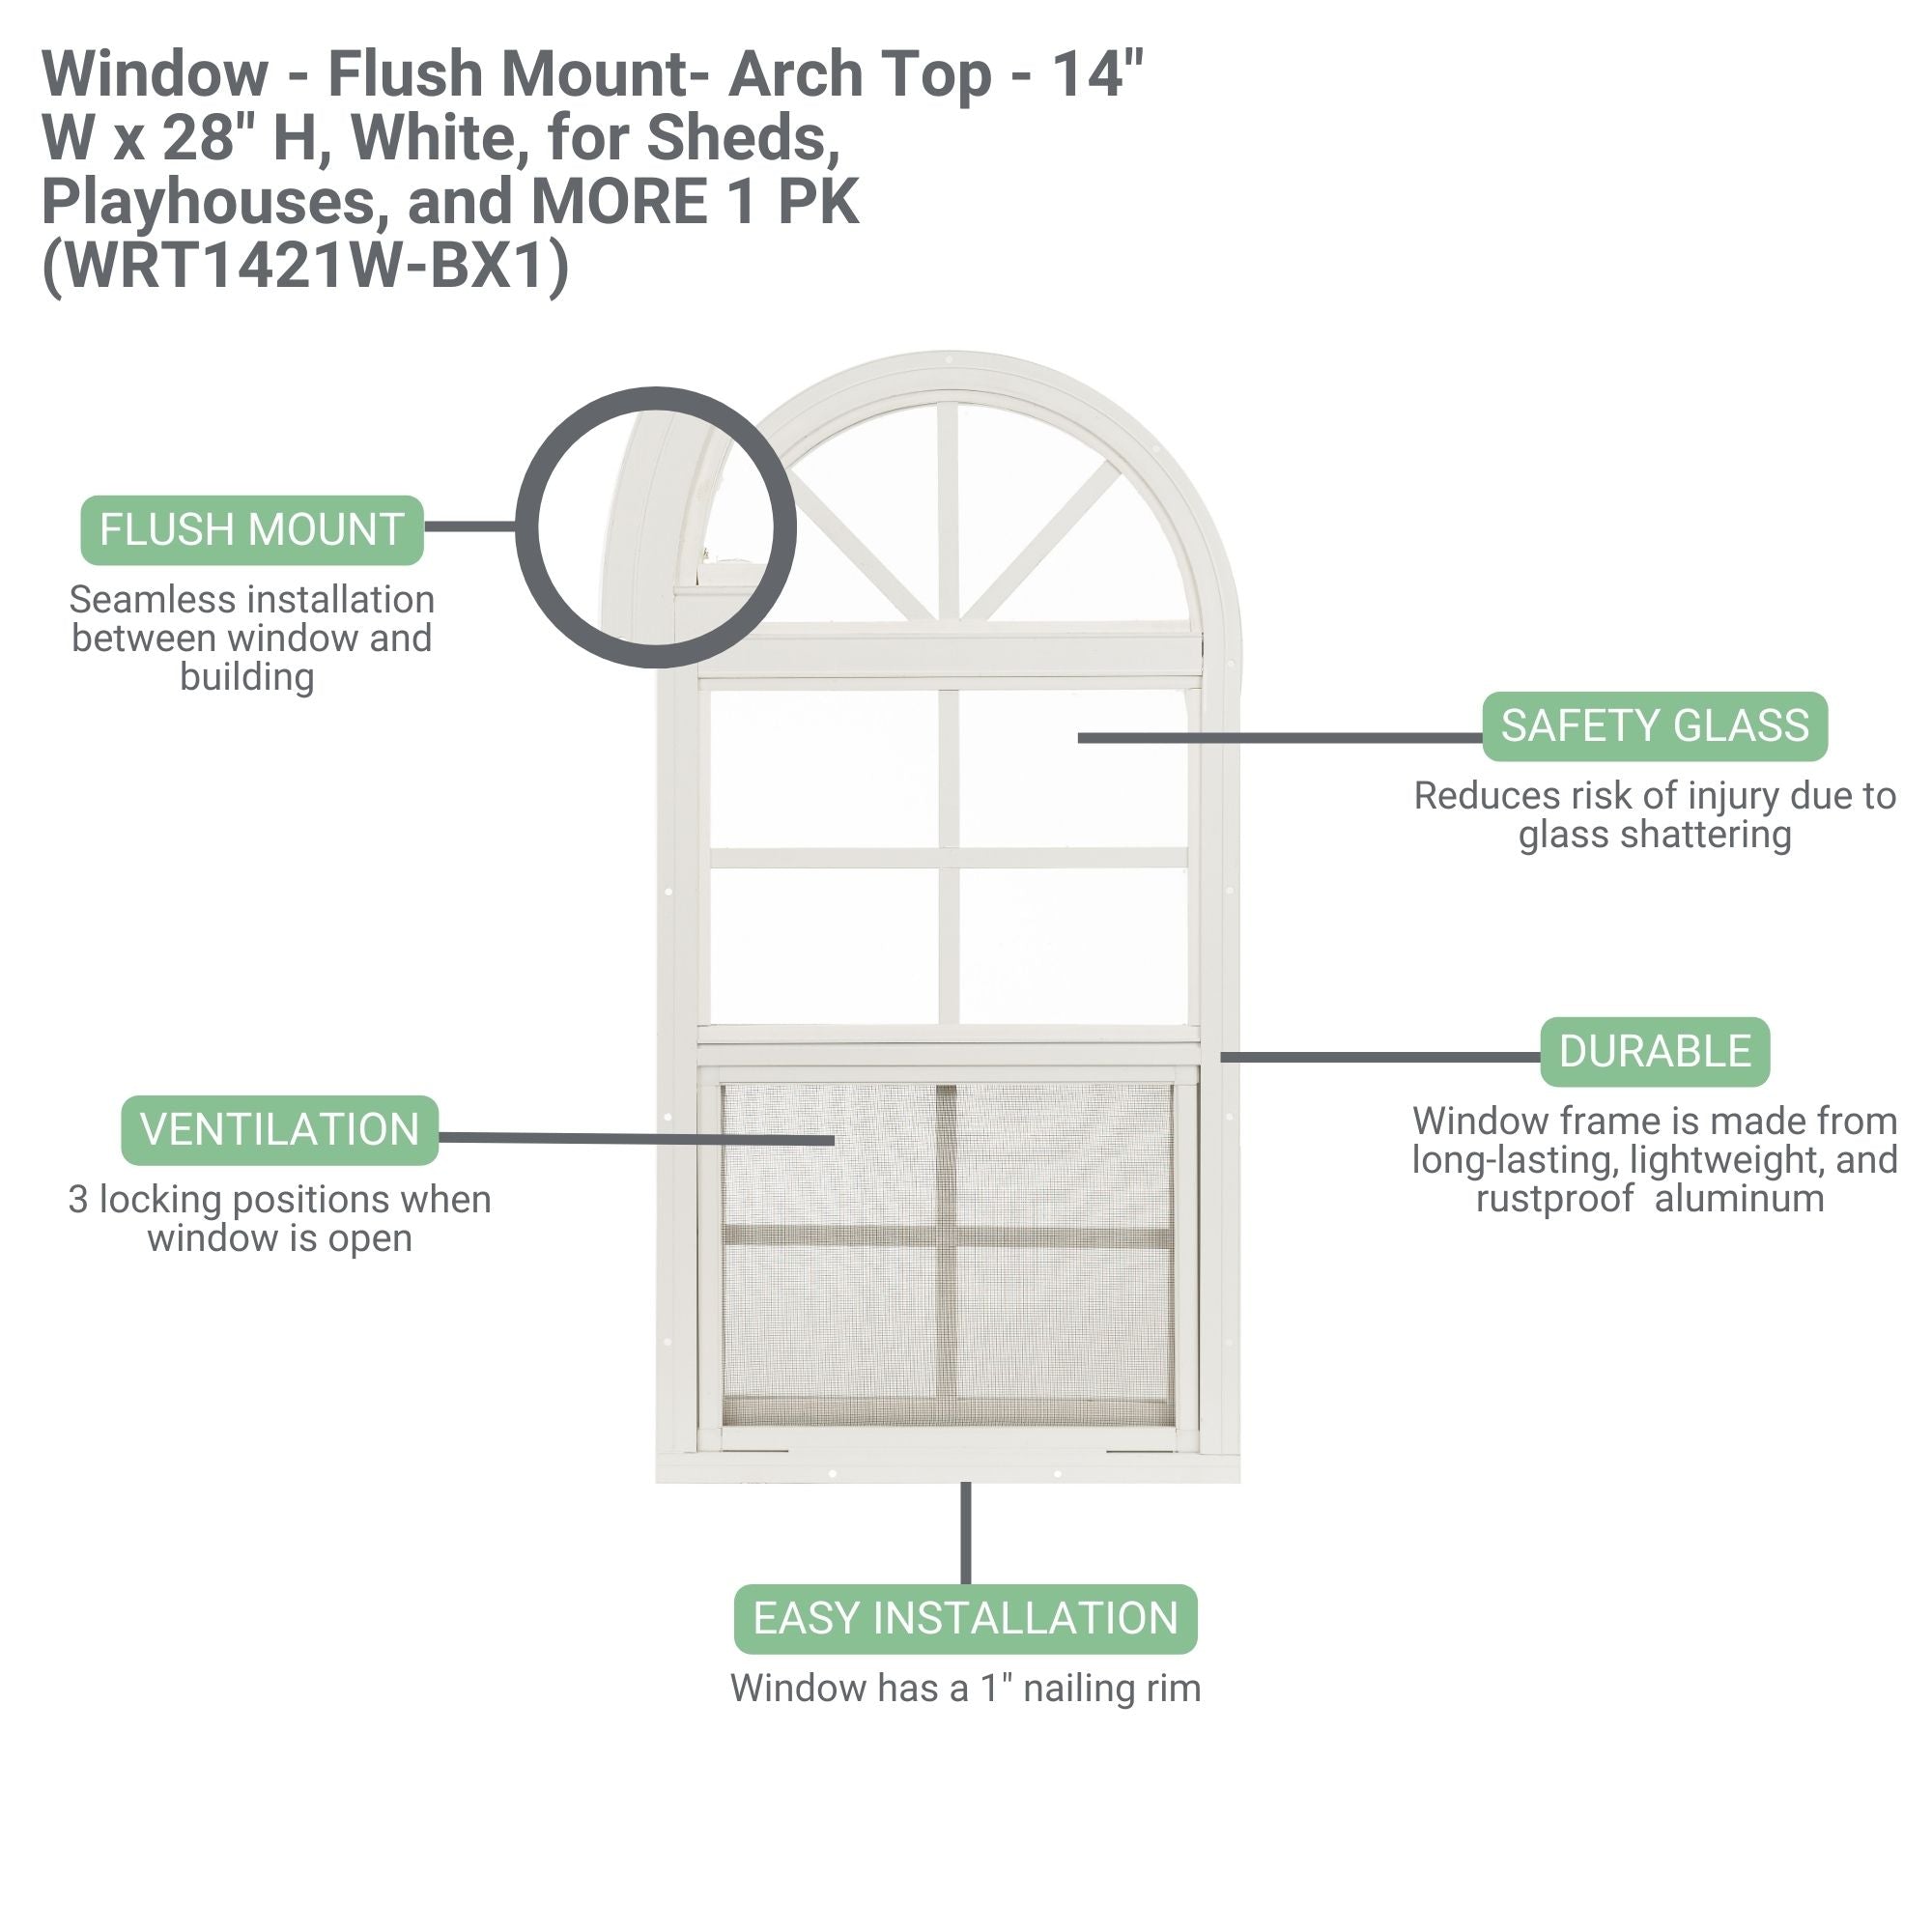 14" W x 28" H Arch Top Flush Mount Shed Window, 1 PK